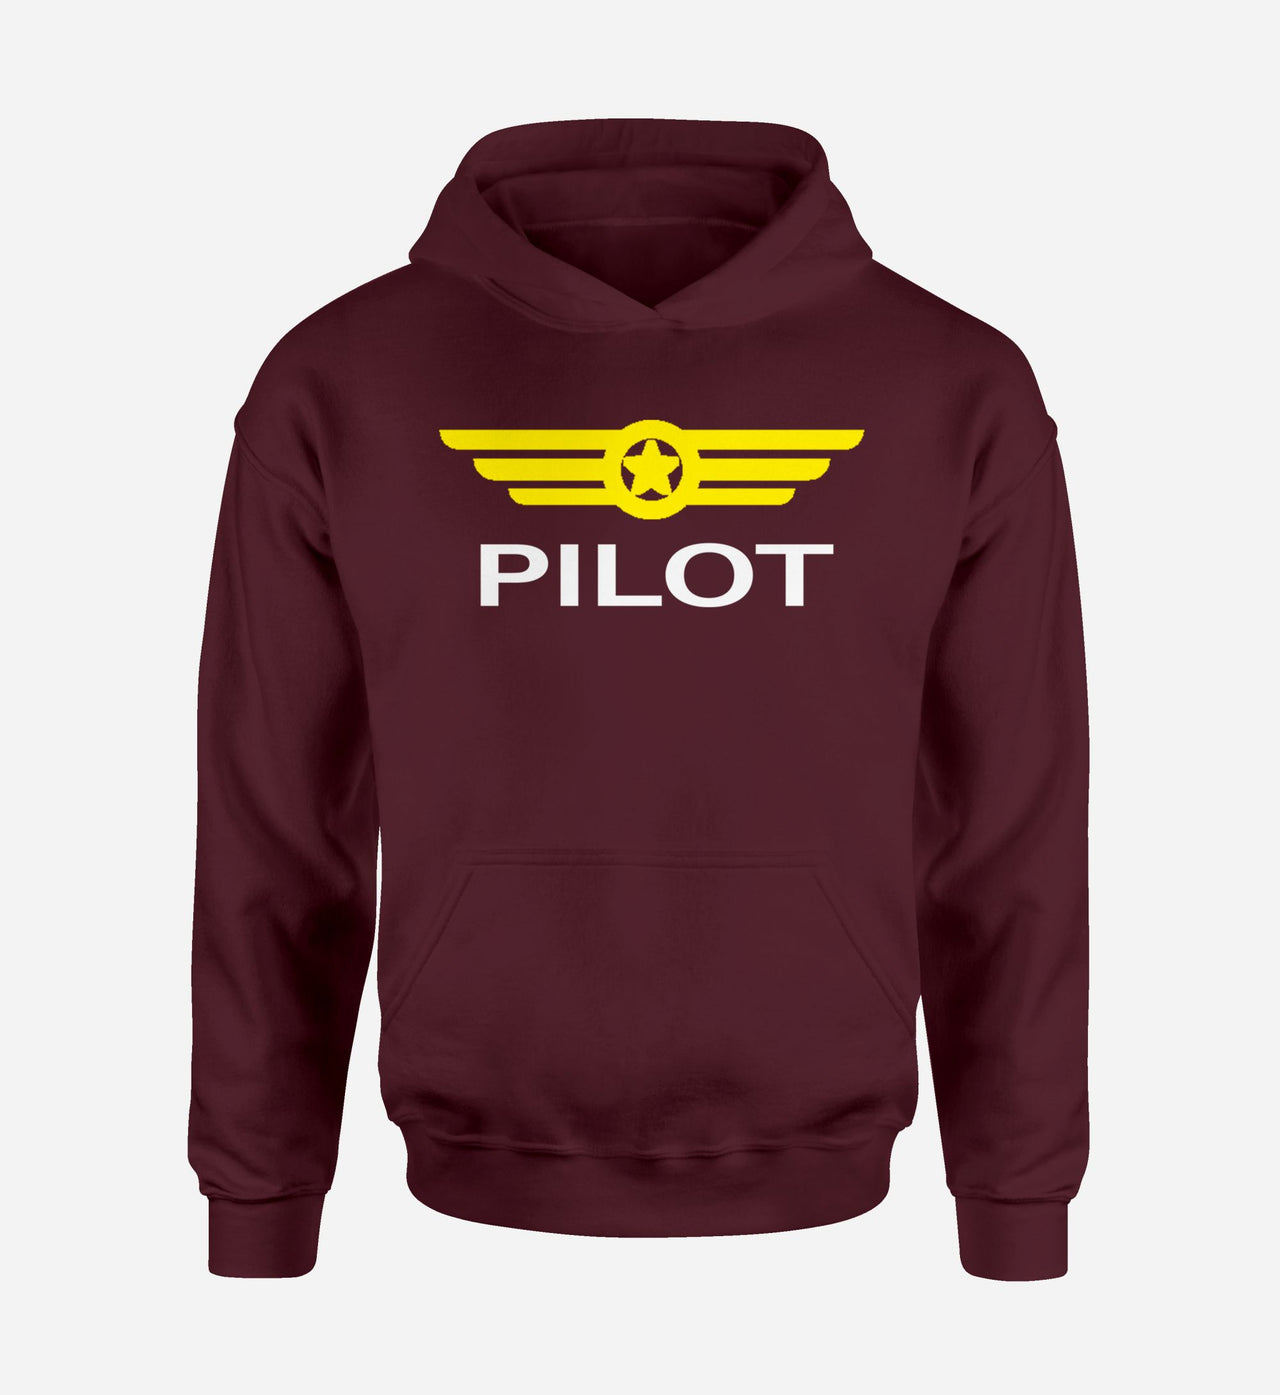 Pilot & Badge Designed Hoodies